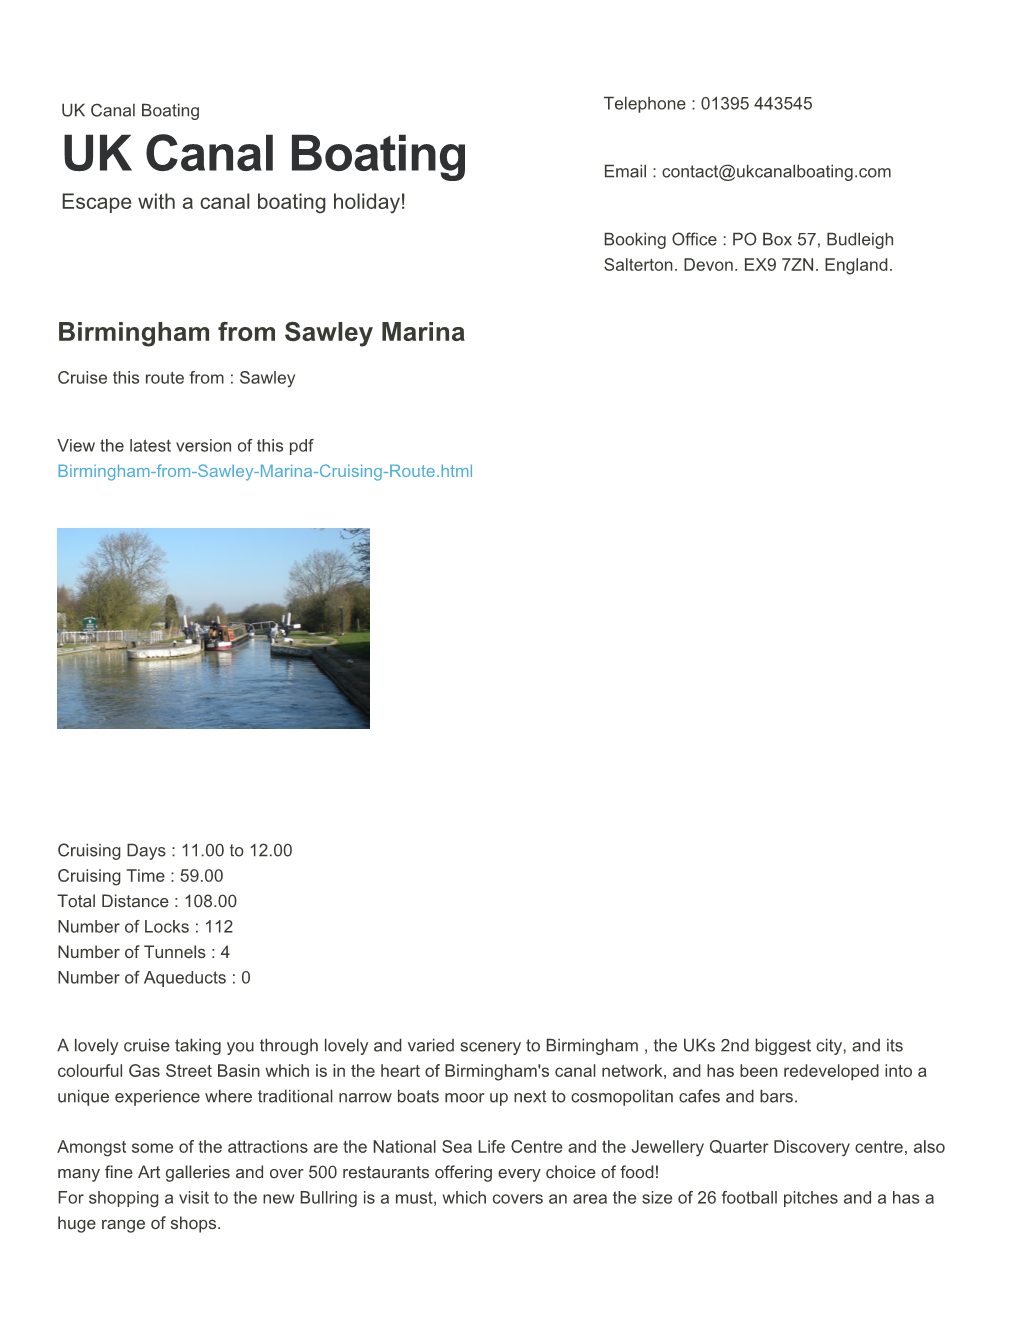 Birmingham from Sawley Marina | UK Canal Boating